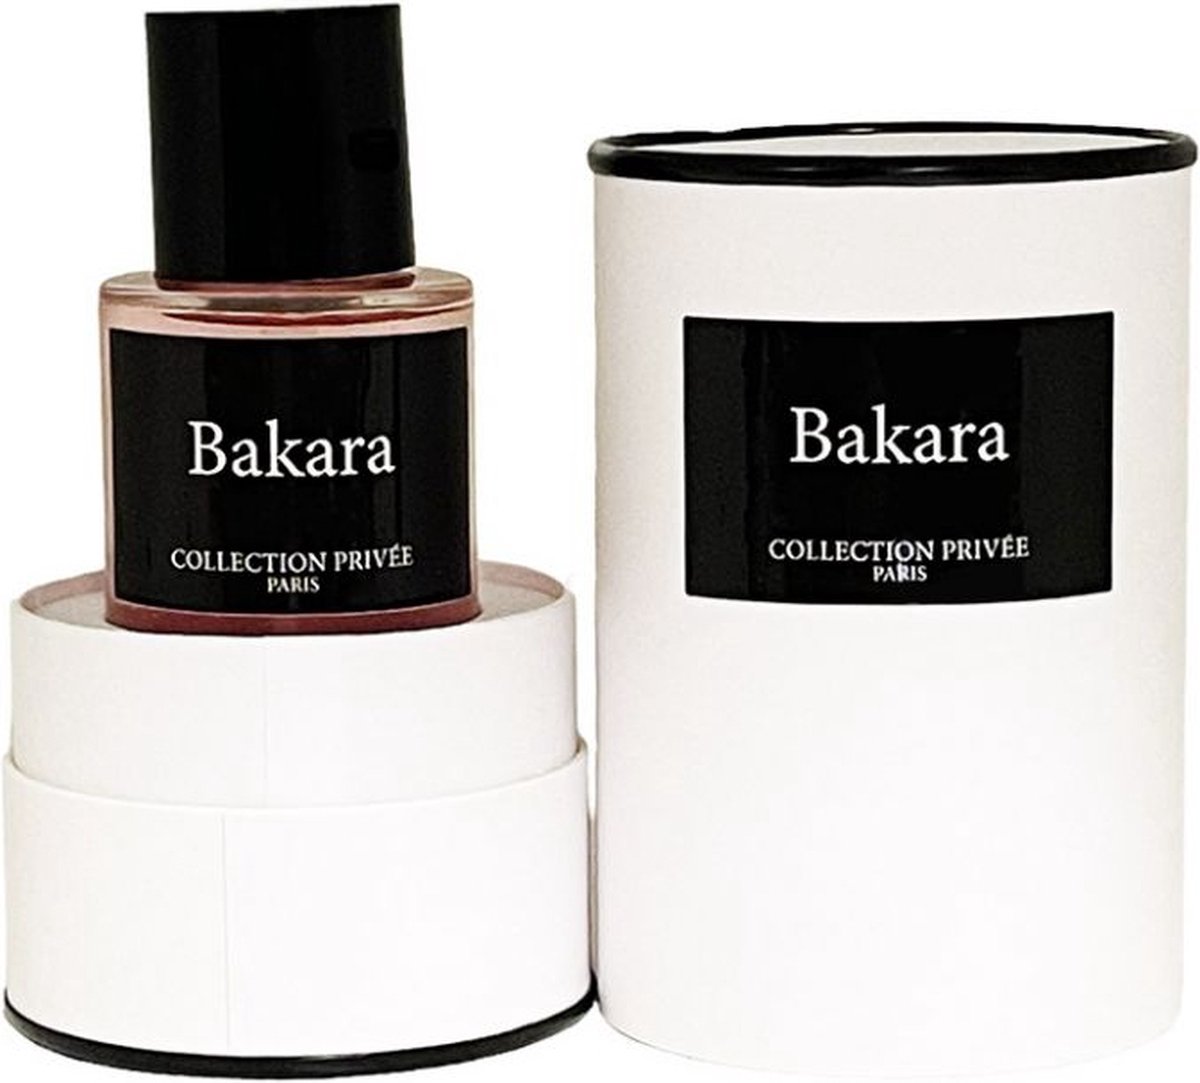 Collection privee paris - Bakara - Baccarat rouge - Parfum 50ML - Unisexe |  bol.com